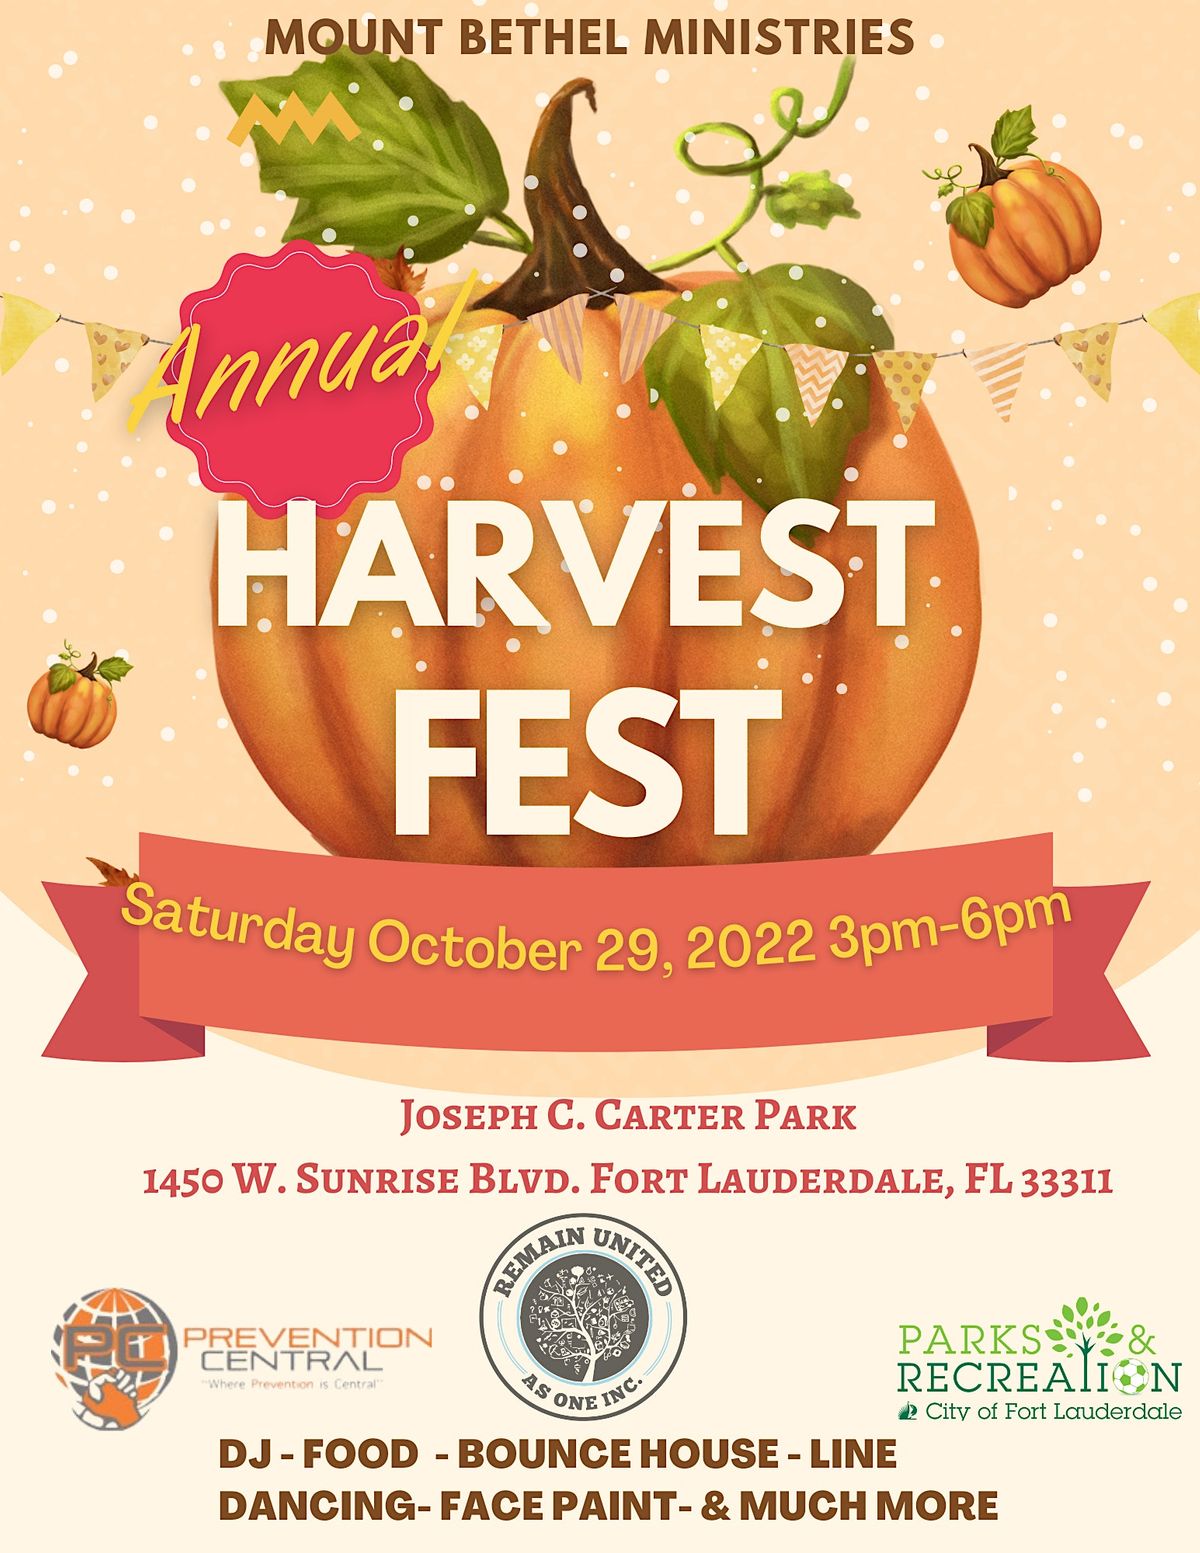 Mount Bethel Harvest Fest 2022, Joseph C. Carter Park, Fort Lauderdale